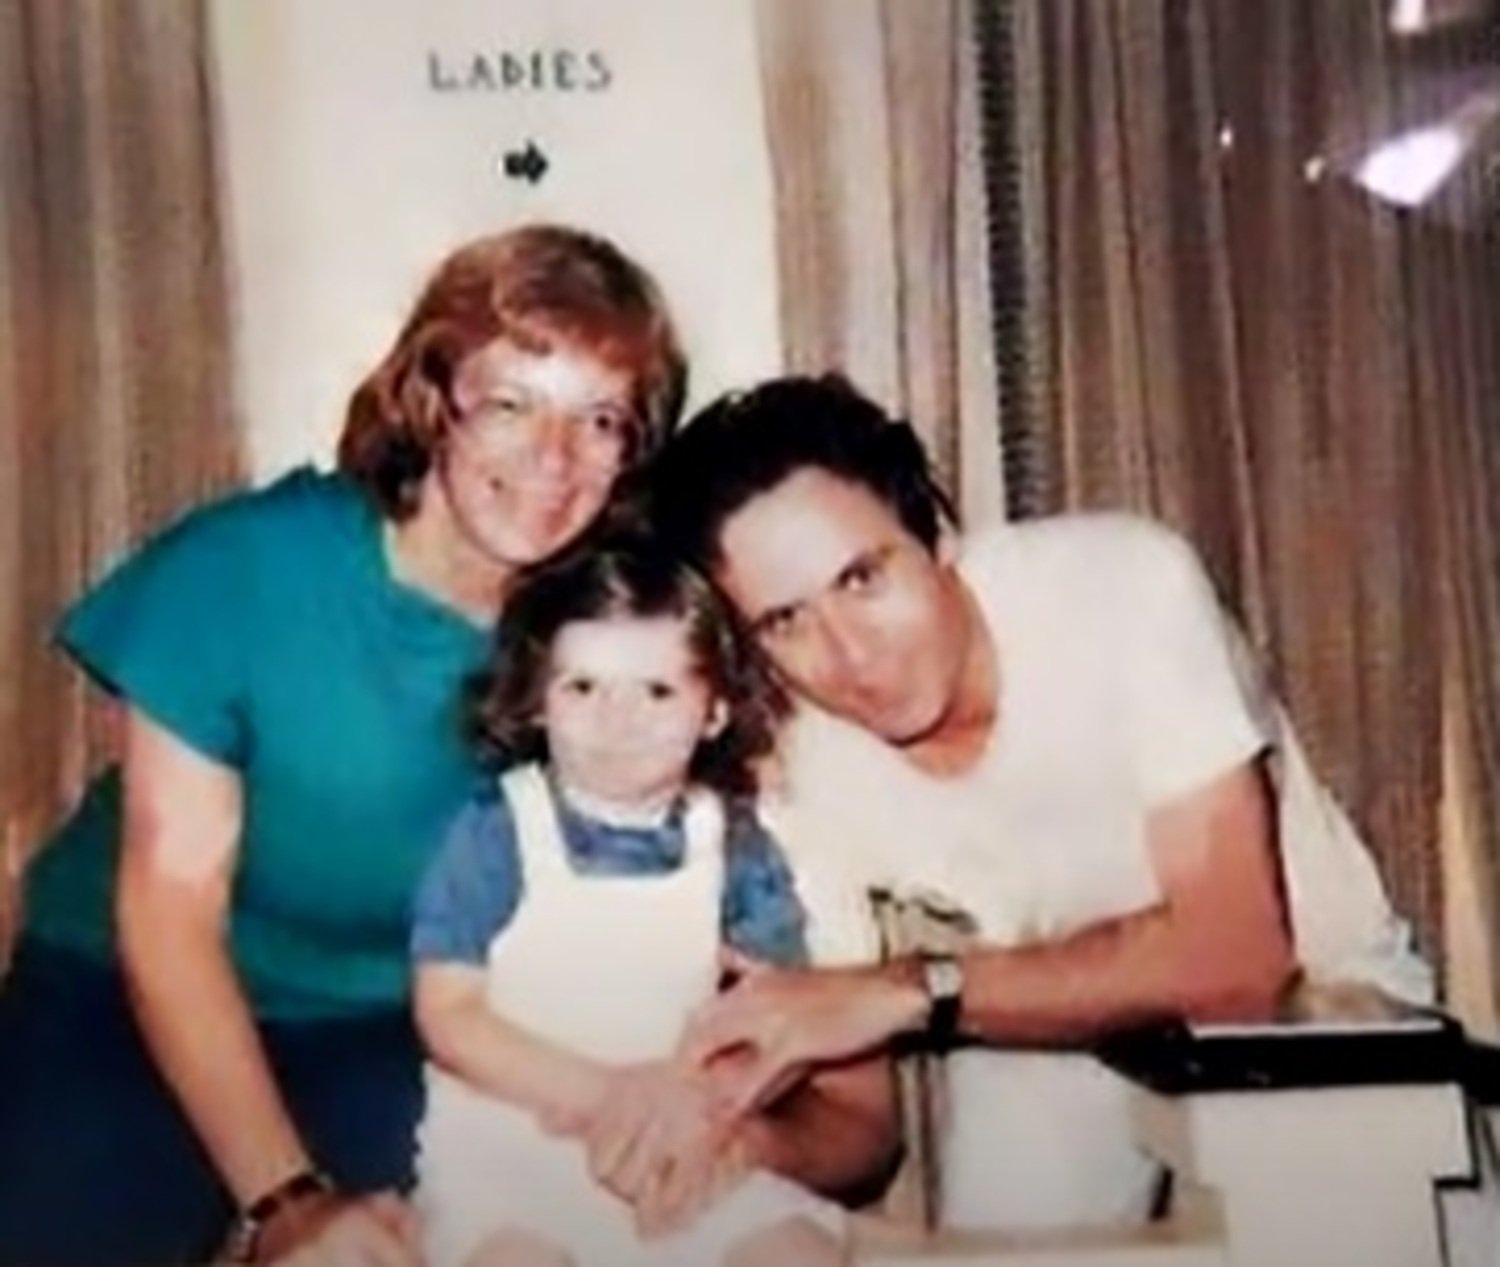 Photo of Carole Ann Boone, Rose Bundy, and Ted Bundy | Source: Youtube.com/c/InsideEdition